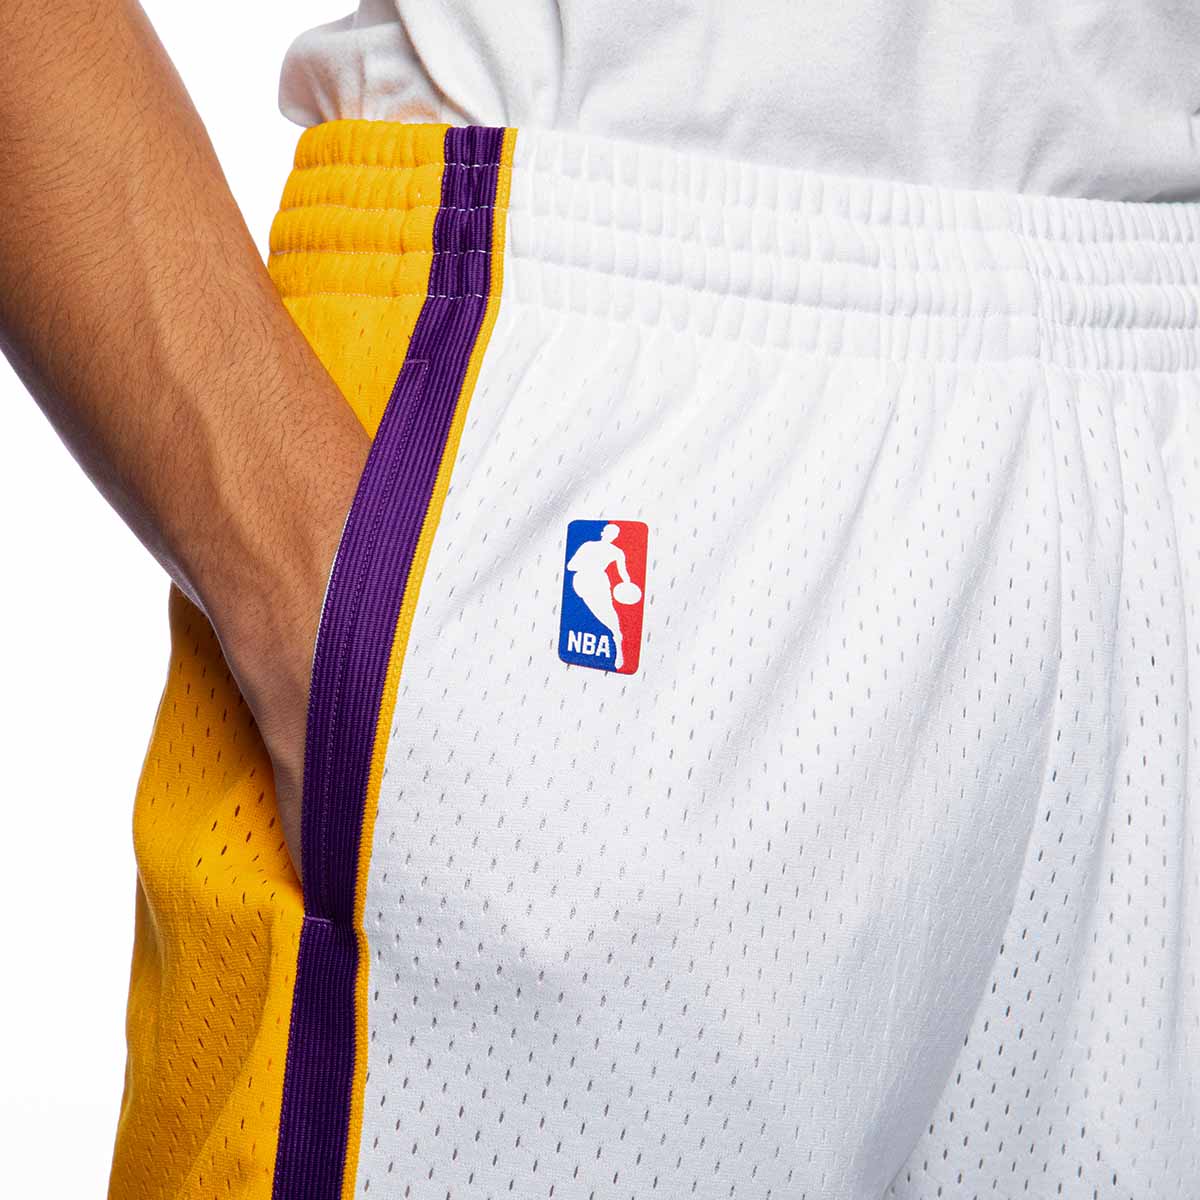 Mitchell & Ness shorts Los Angeles Lakers white Swingman Shorts